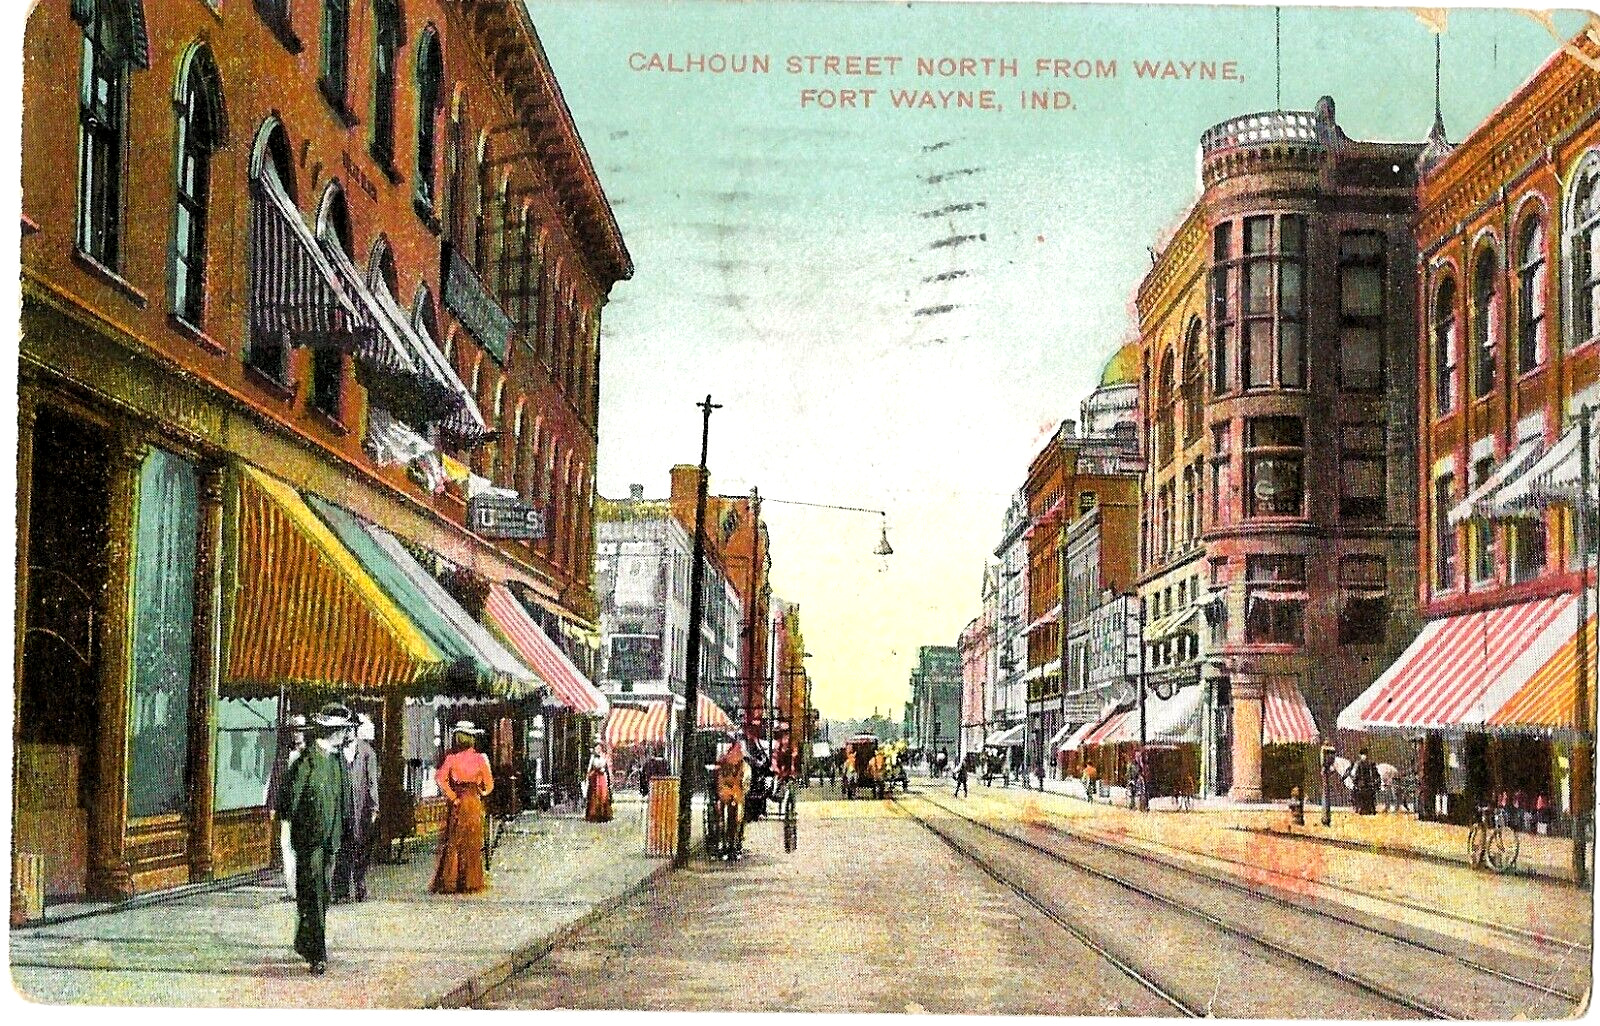 Fort Wayne IN 1908 on Calhoun Street North from Wayne